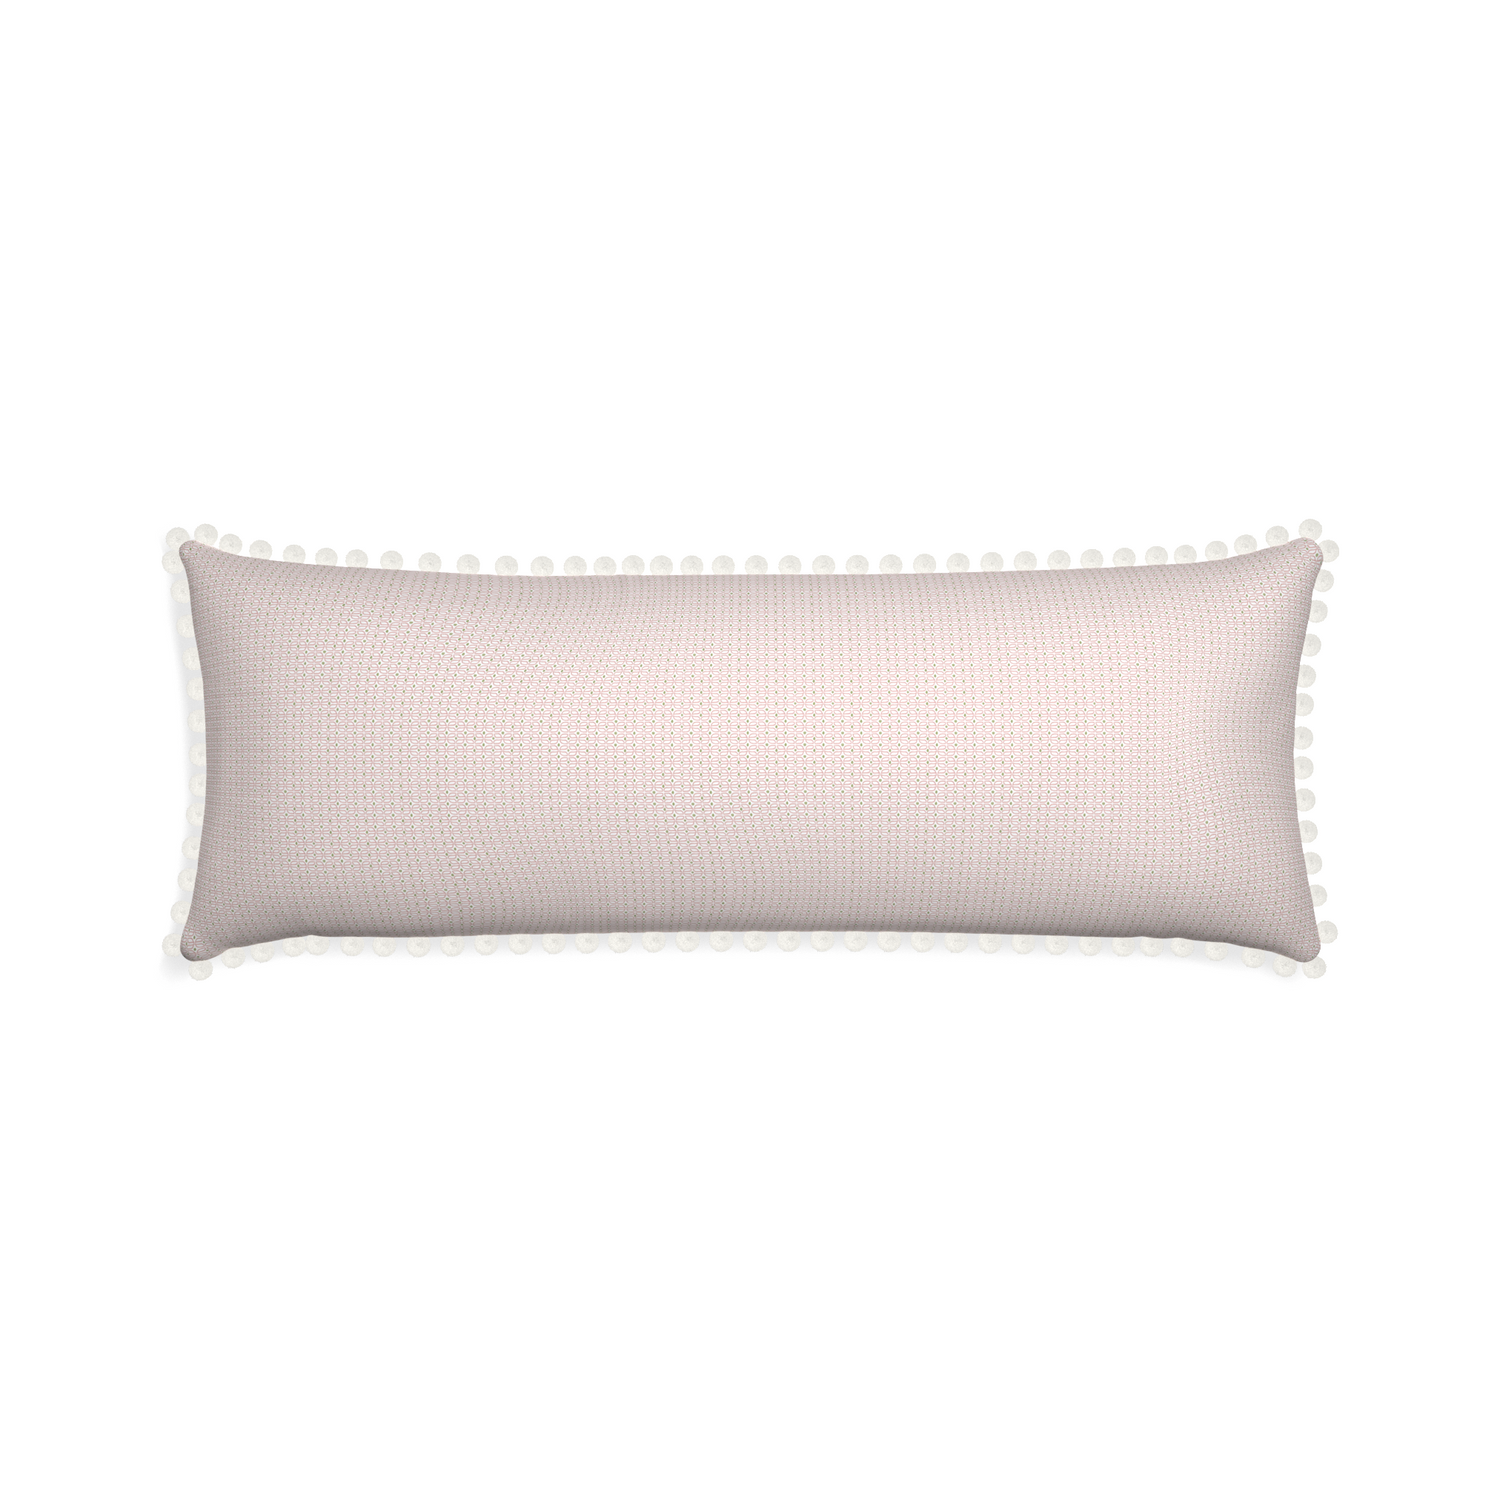 Xl-lumbar loomi pink custom pillow with snow pom pom on white background